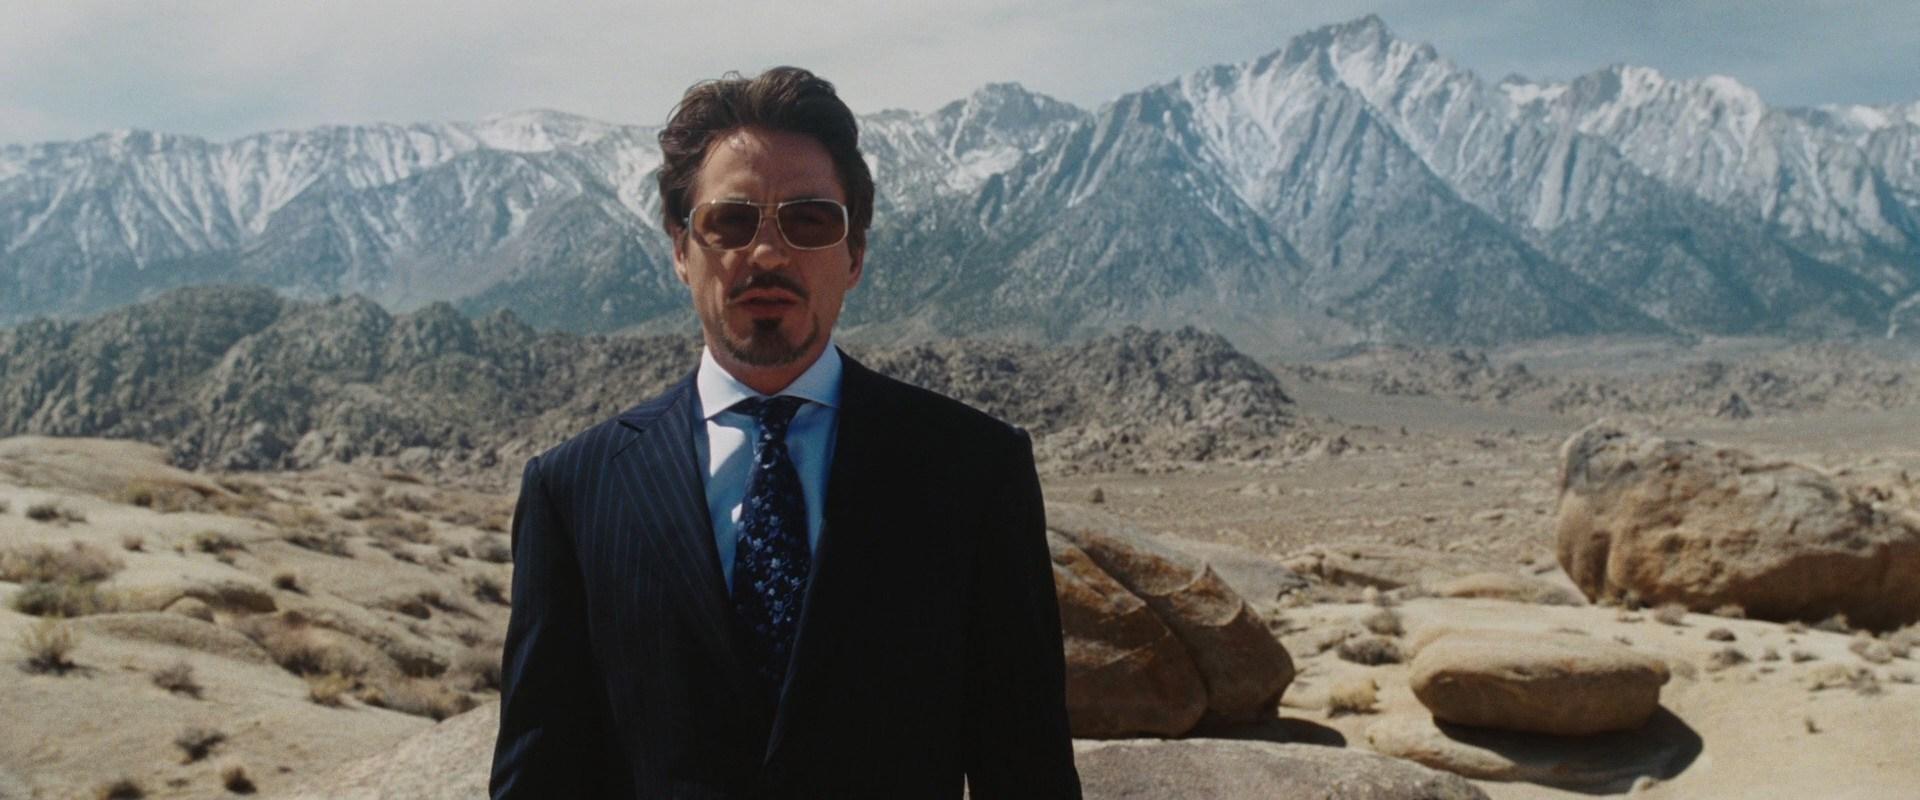 Iron Man Filming Locations | Kunar Province